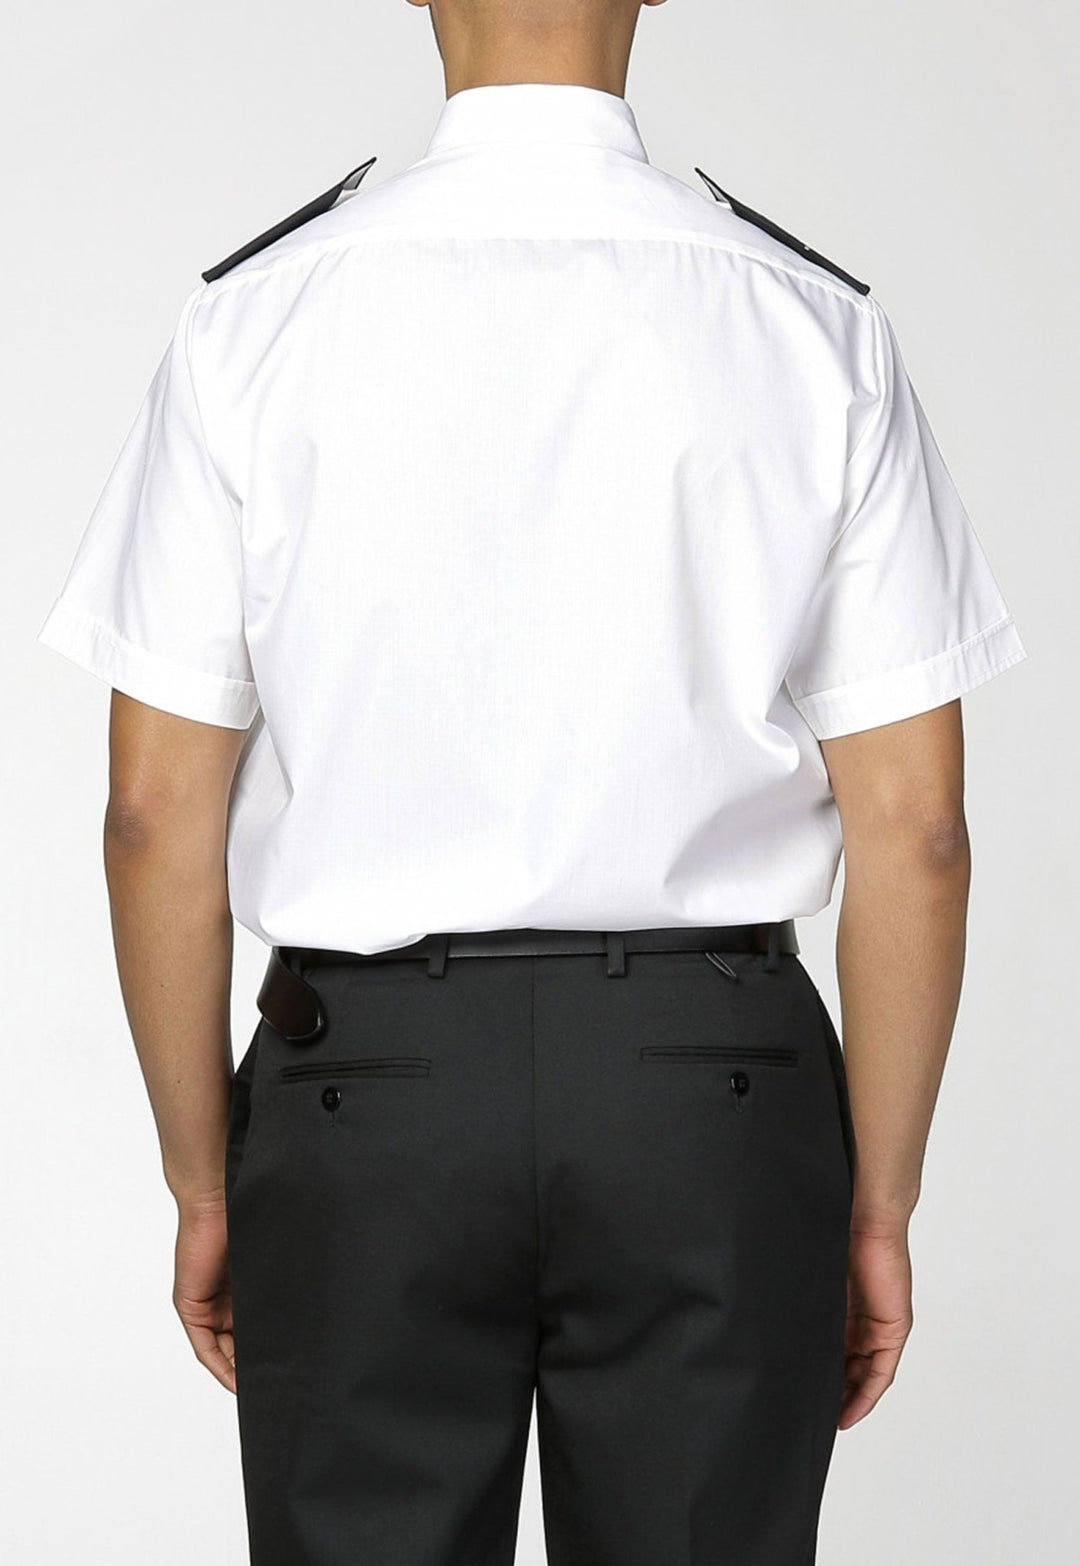 OPGear Men's Security Short Sleeve Shirt - The Work Uniform Company